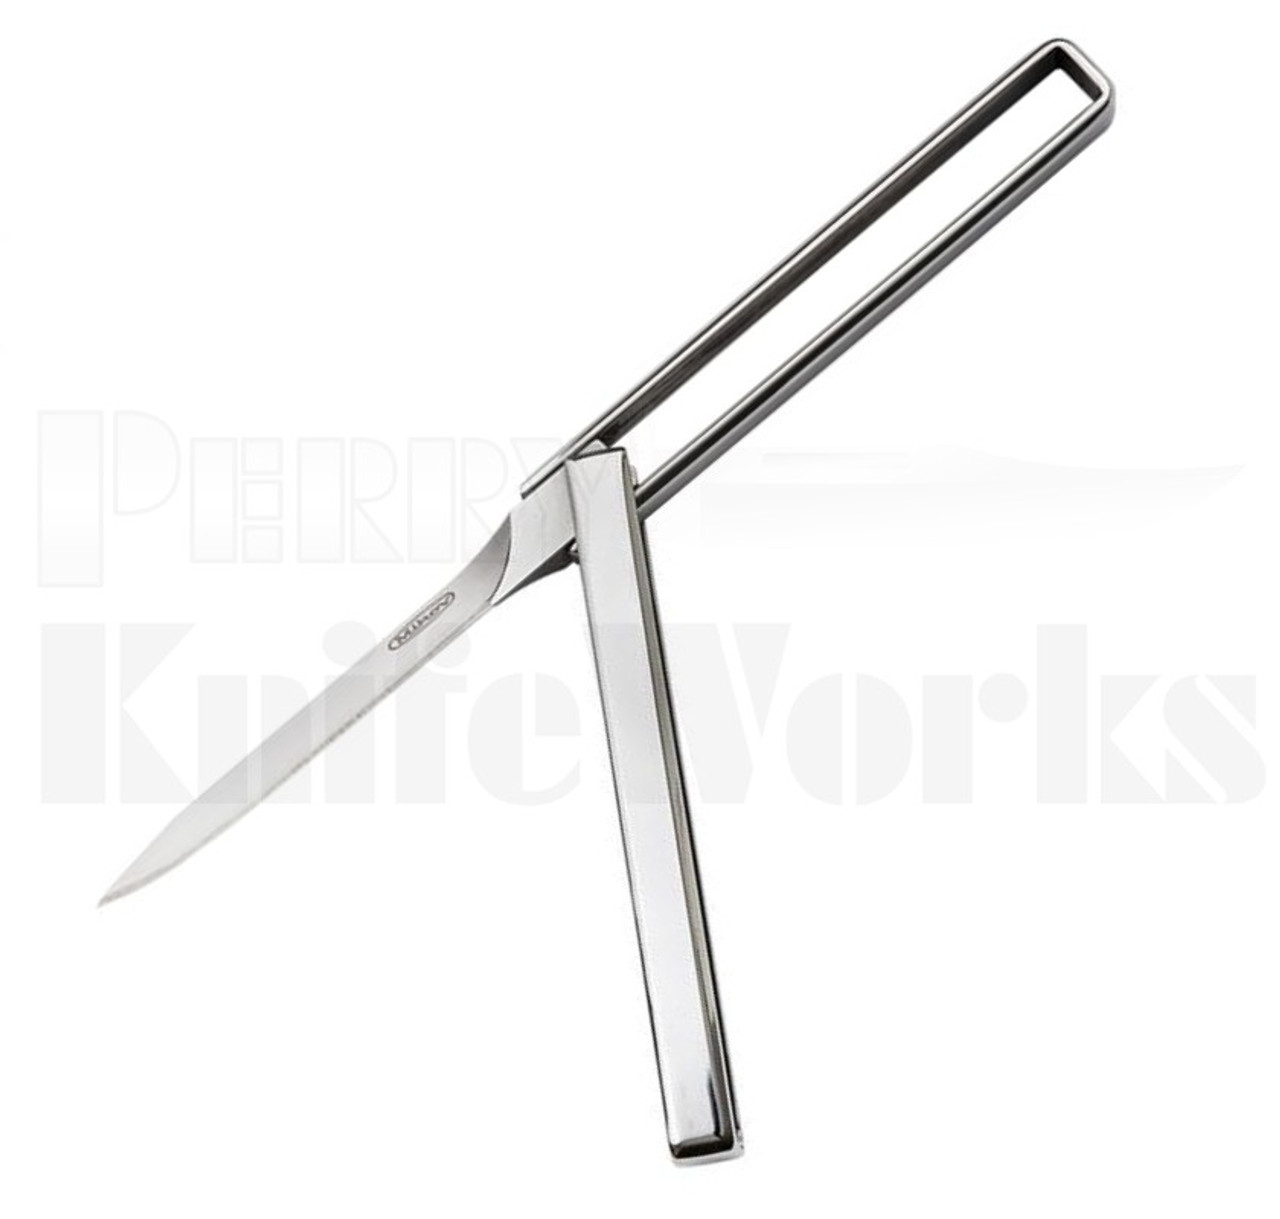 Mikov Kostka Cube Knife Stainless Steel Pocket Knife l Open